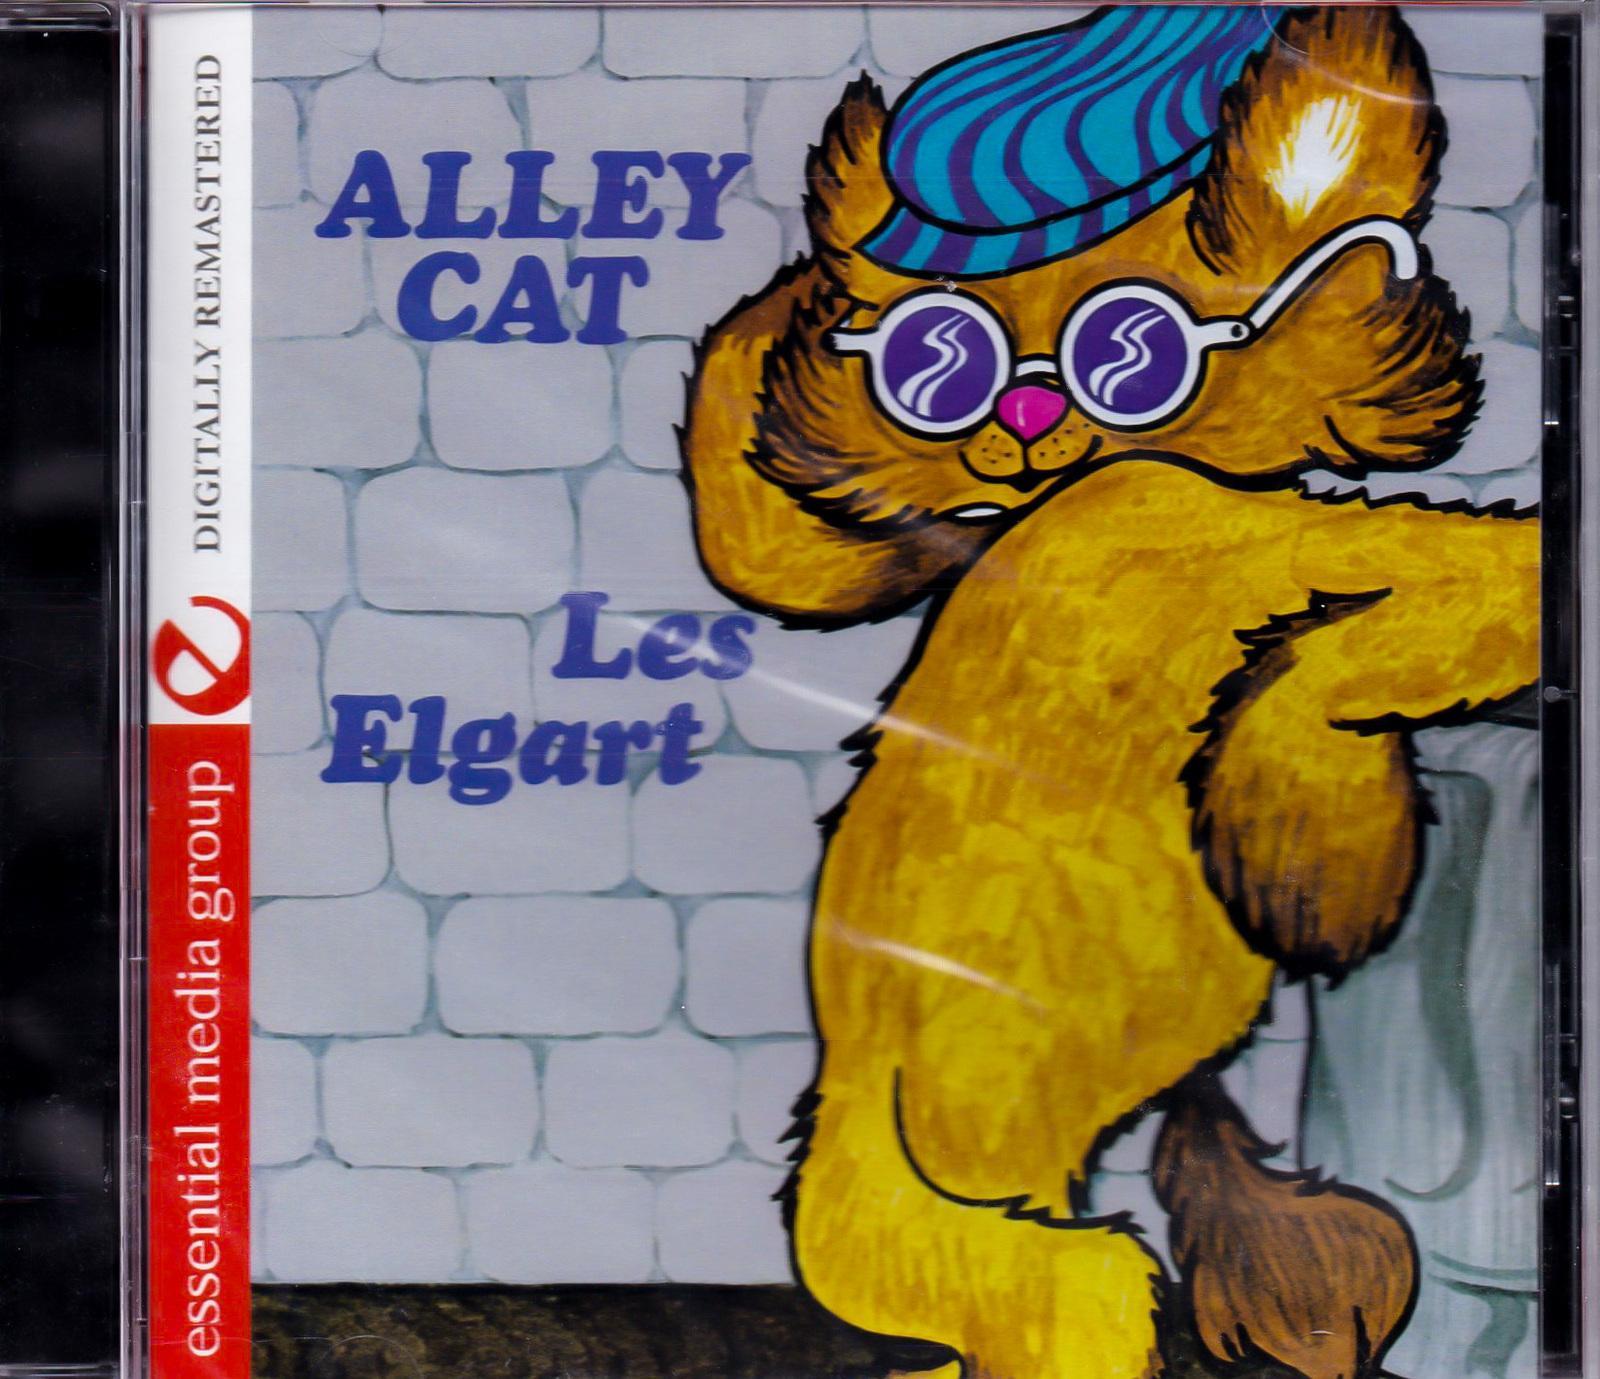 Alley Cat -Les Elgart CD